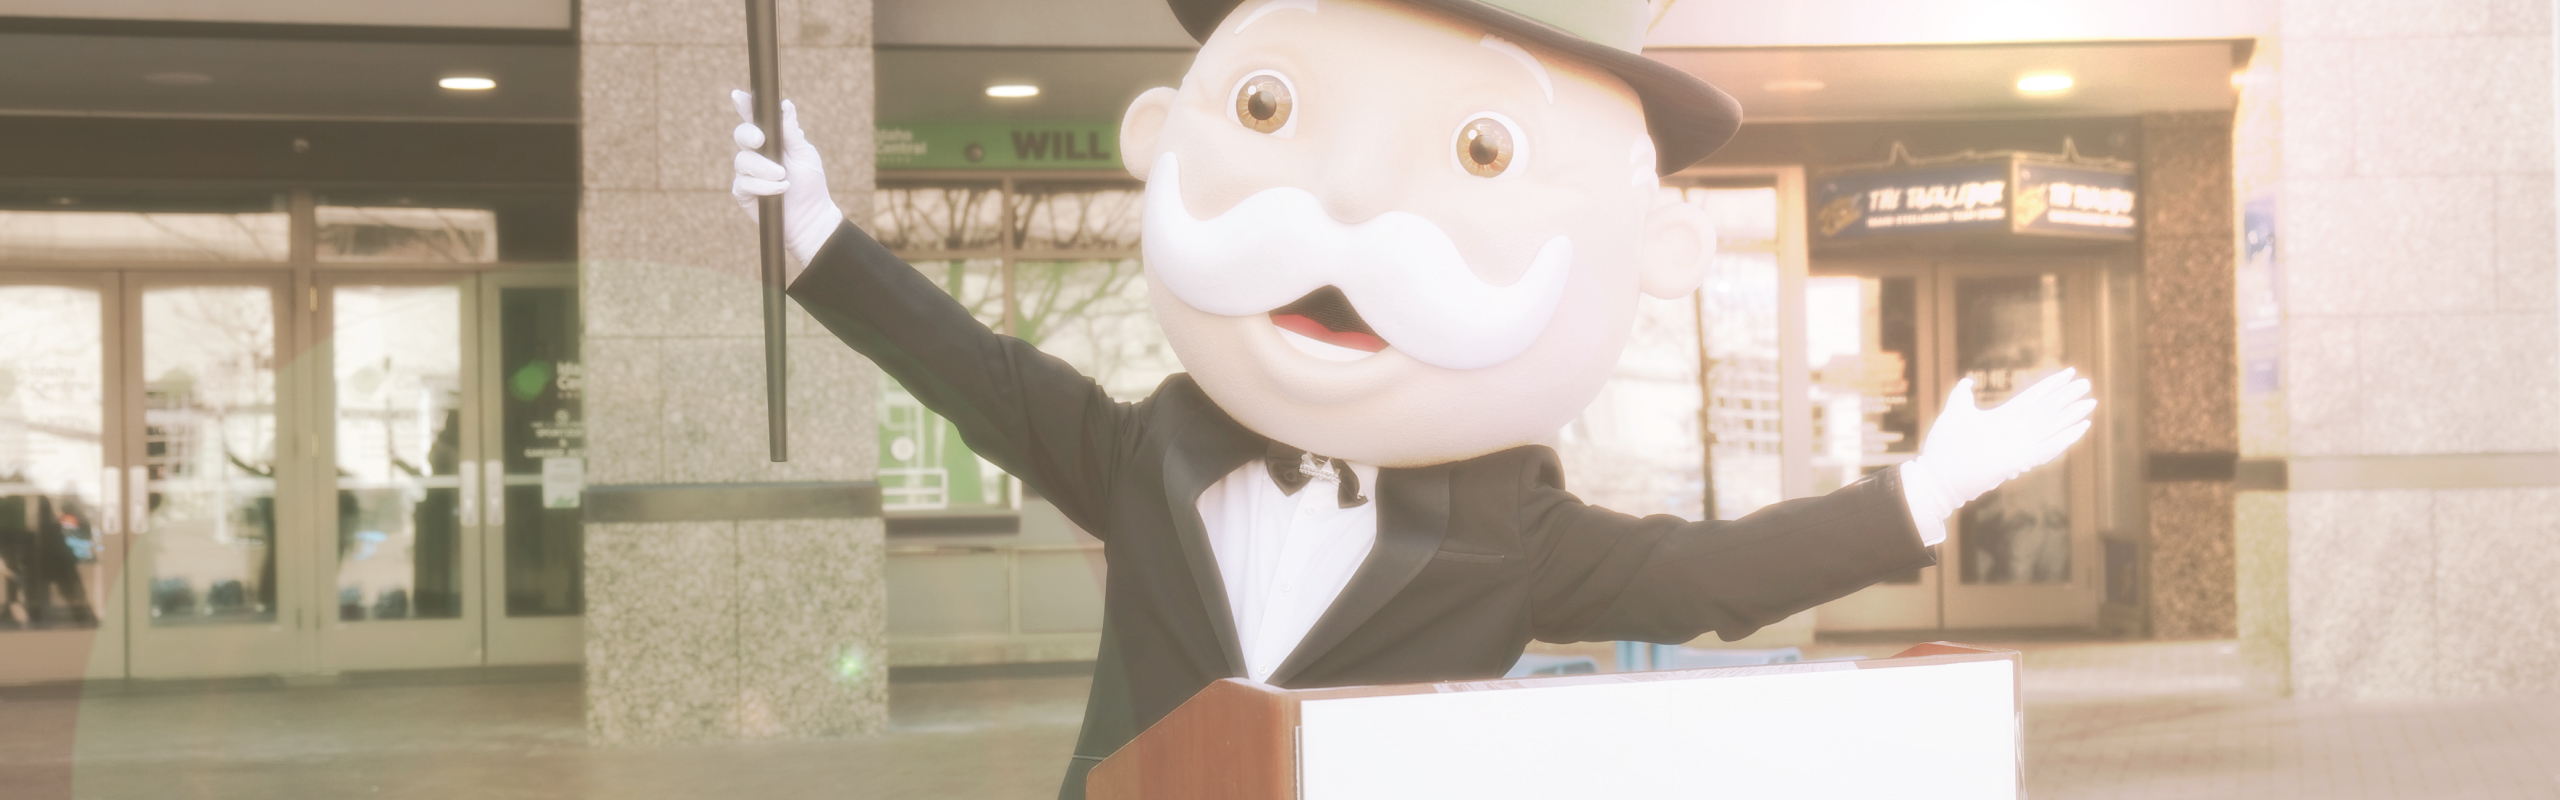 Mister Monopoly announces the Boise Edition of Monopoly